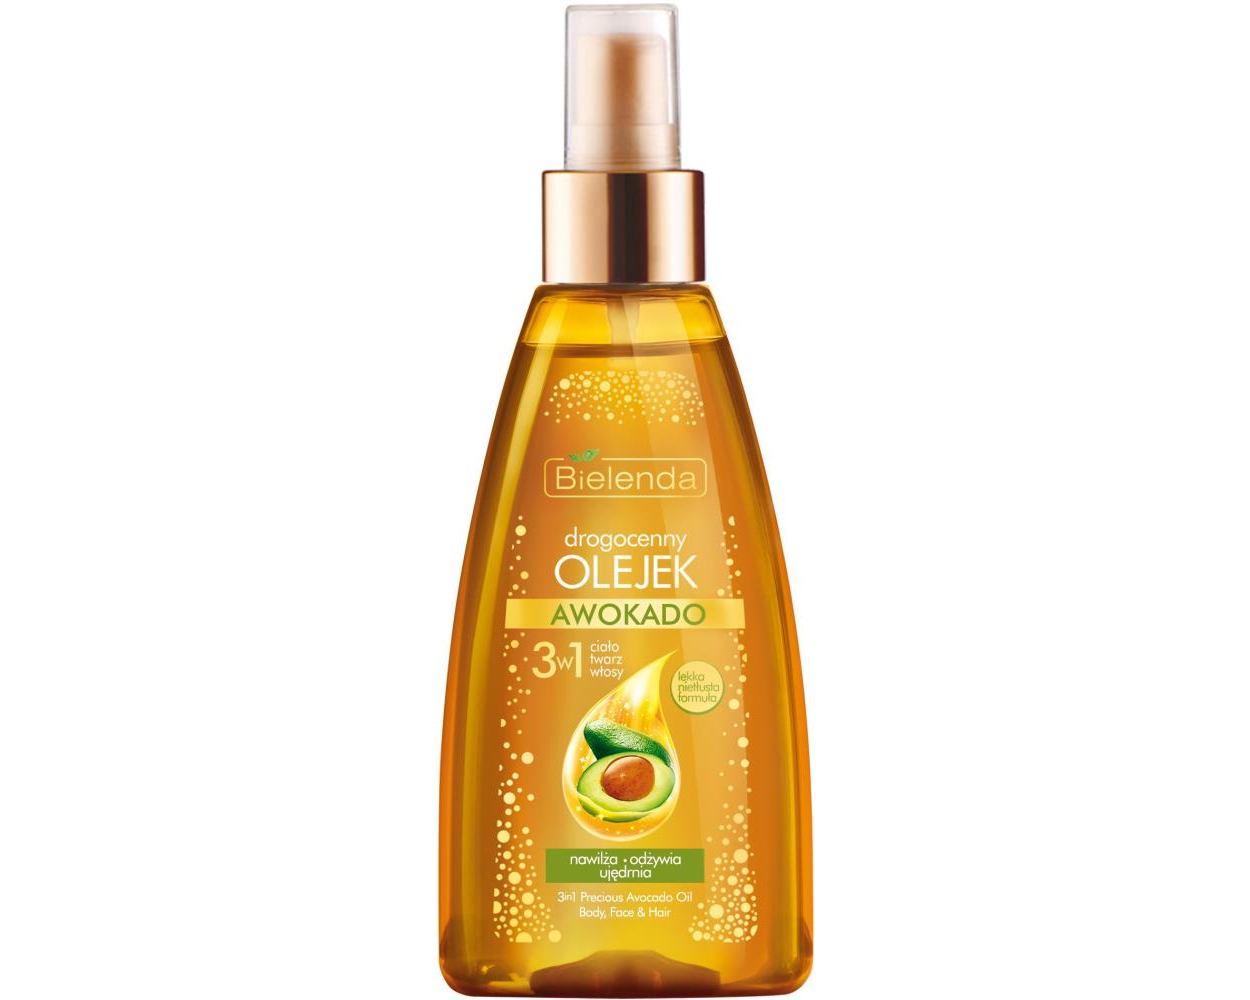 Bielenda Precious AVOCADO Oils 3in1 for Body Face & Hair Intense  Rejuvenating